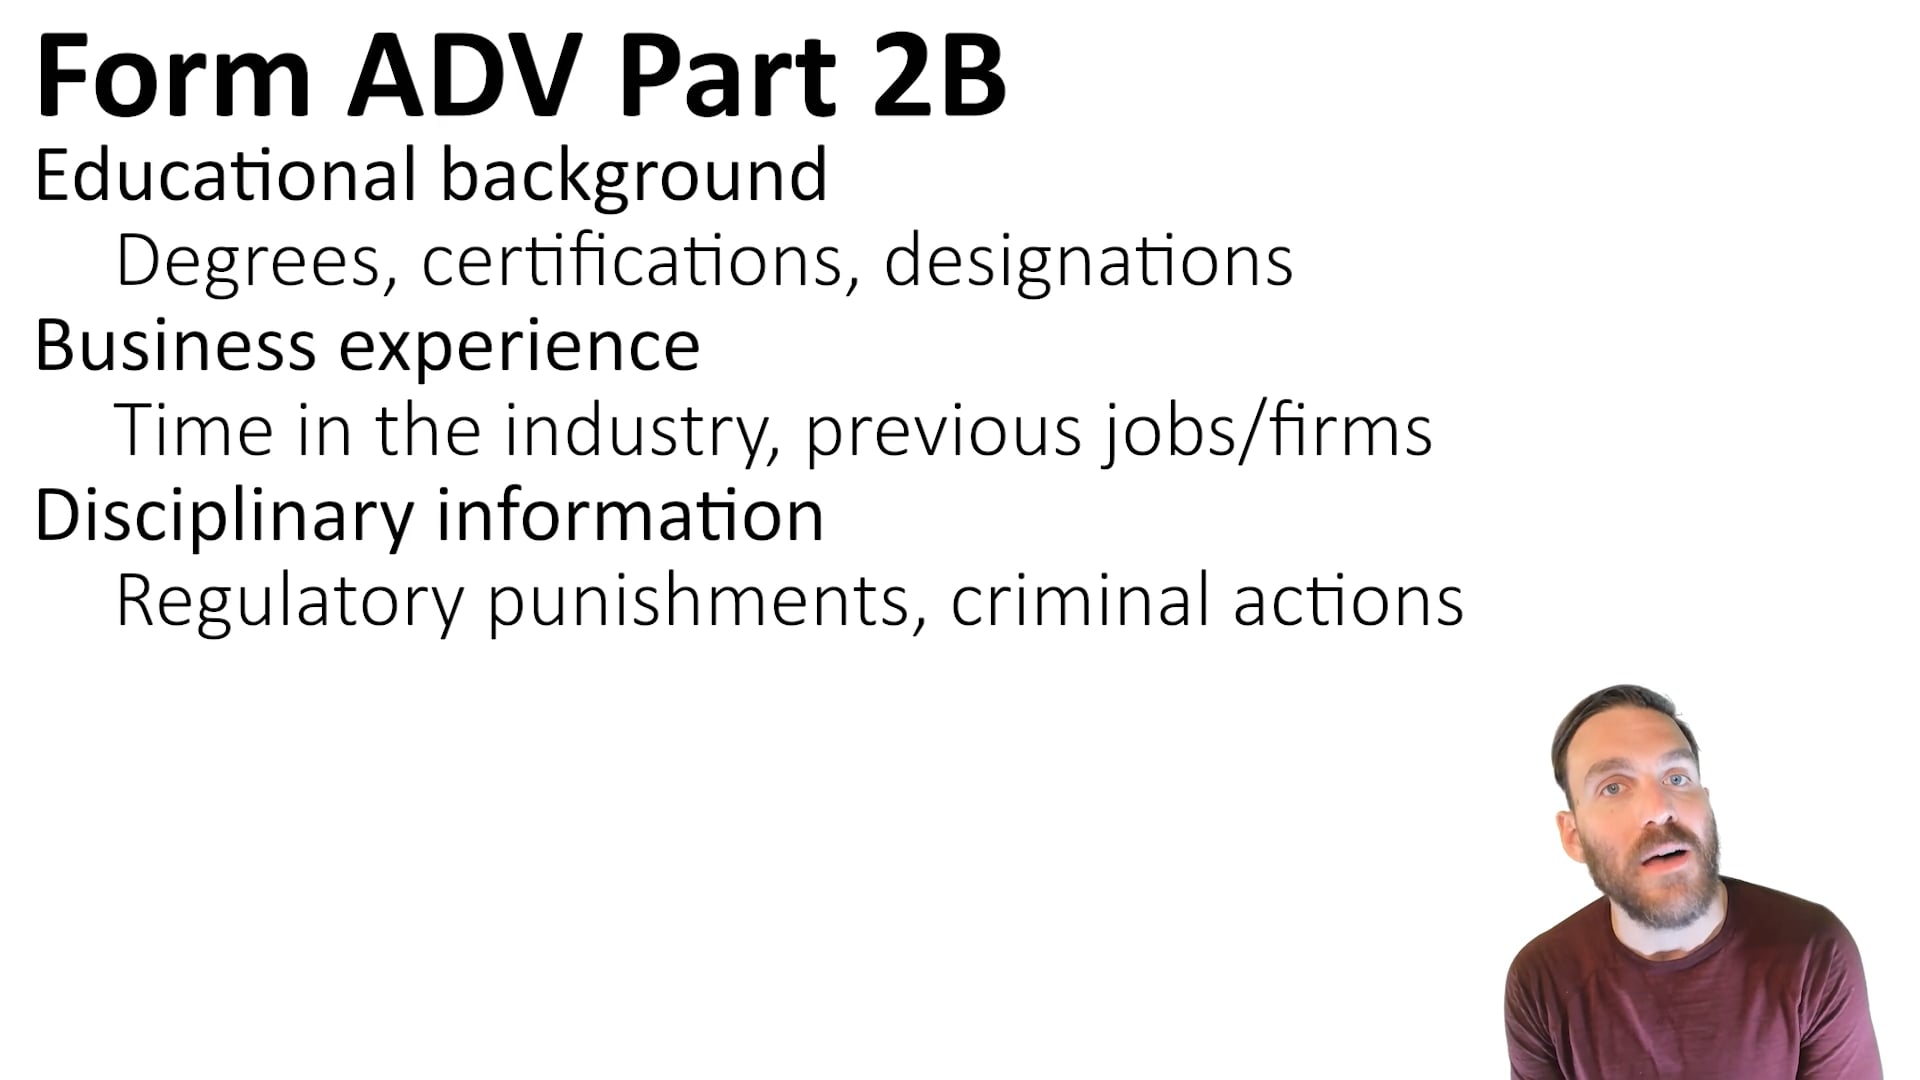 Form ADV Part 2B (basics)